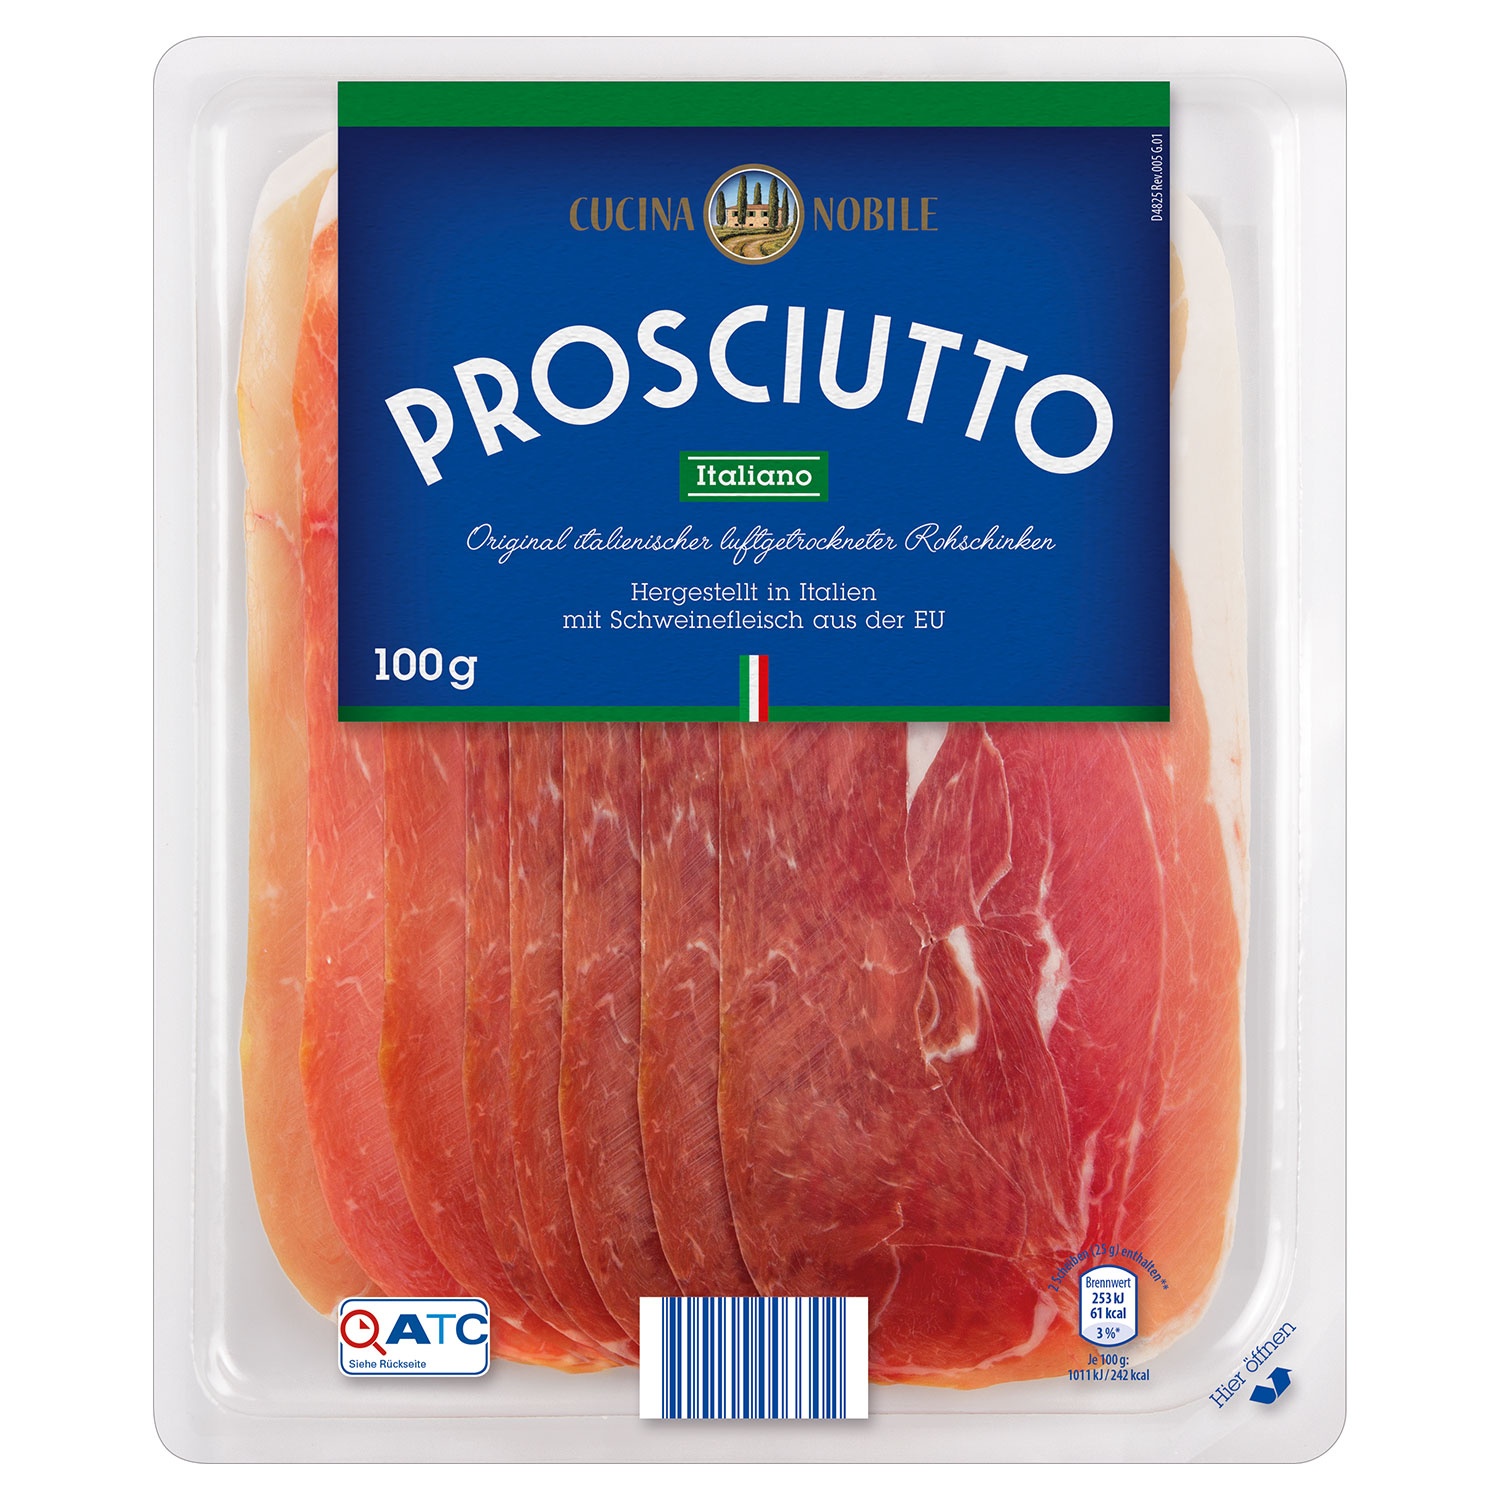 CUCINA NOBILE Prosciutto 100 g